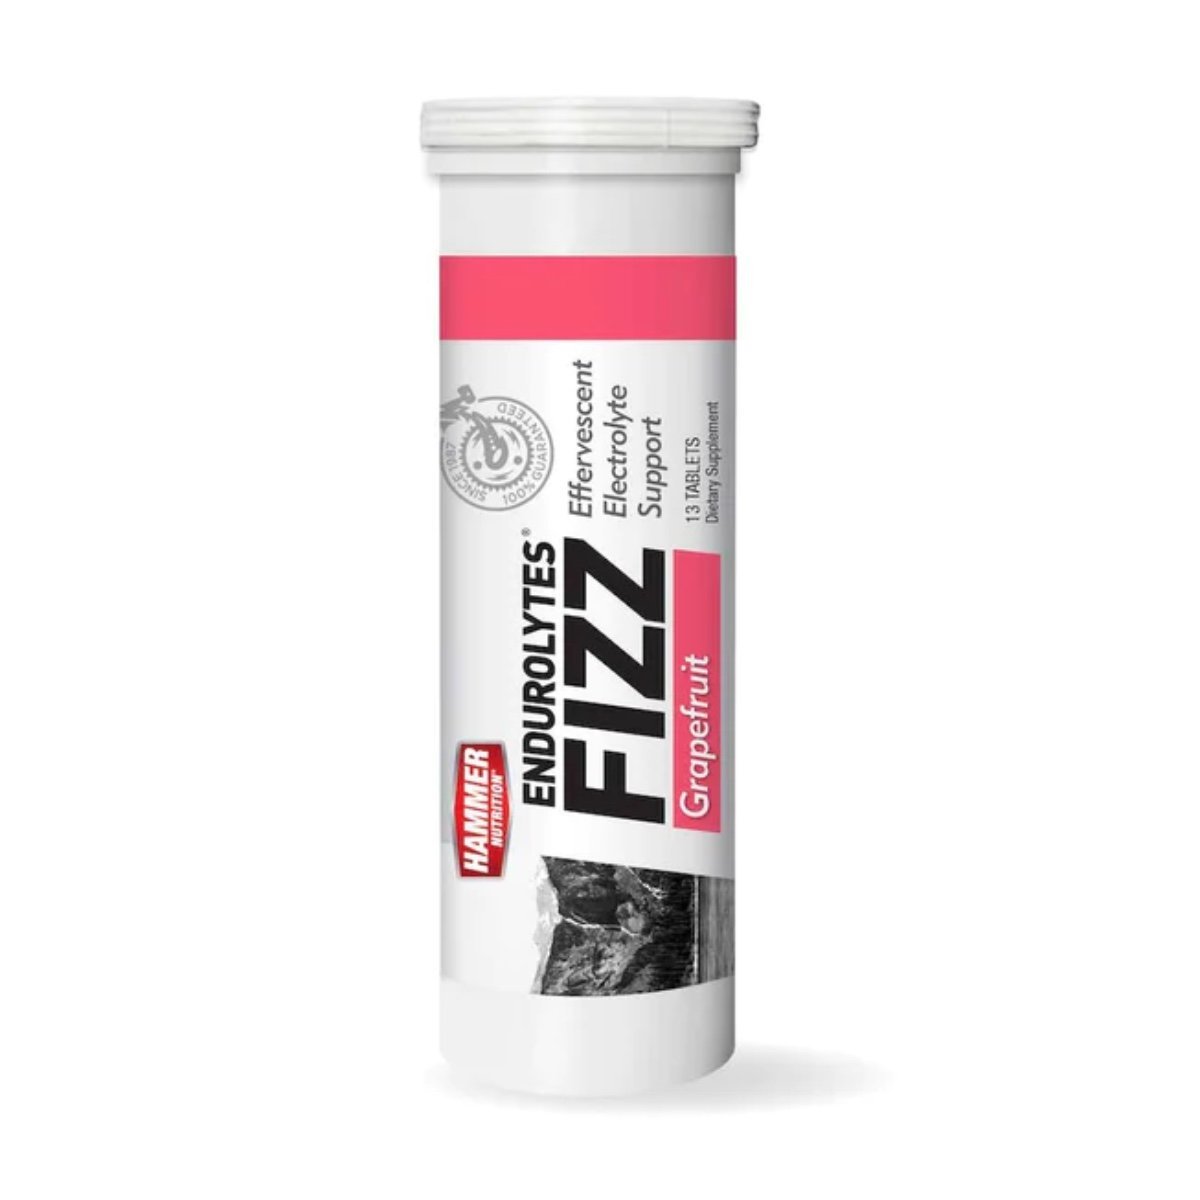 Šumivé tablety Hammer Endurolytes Fizz®, 100 g, grapefruit